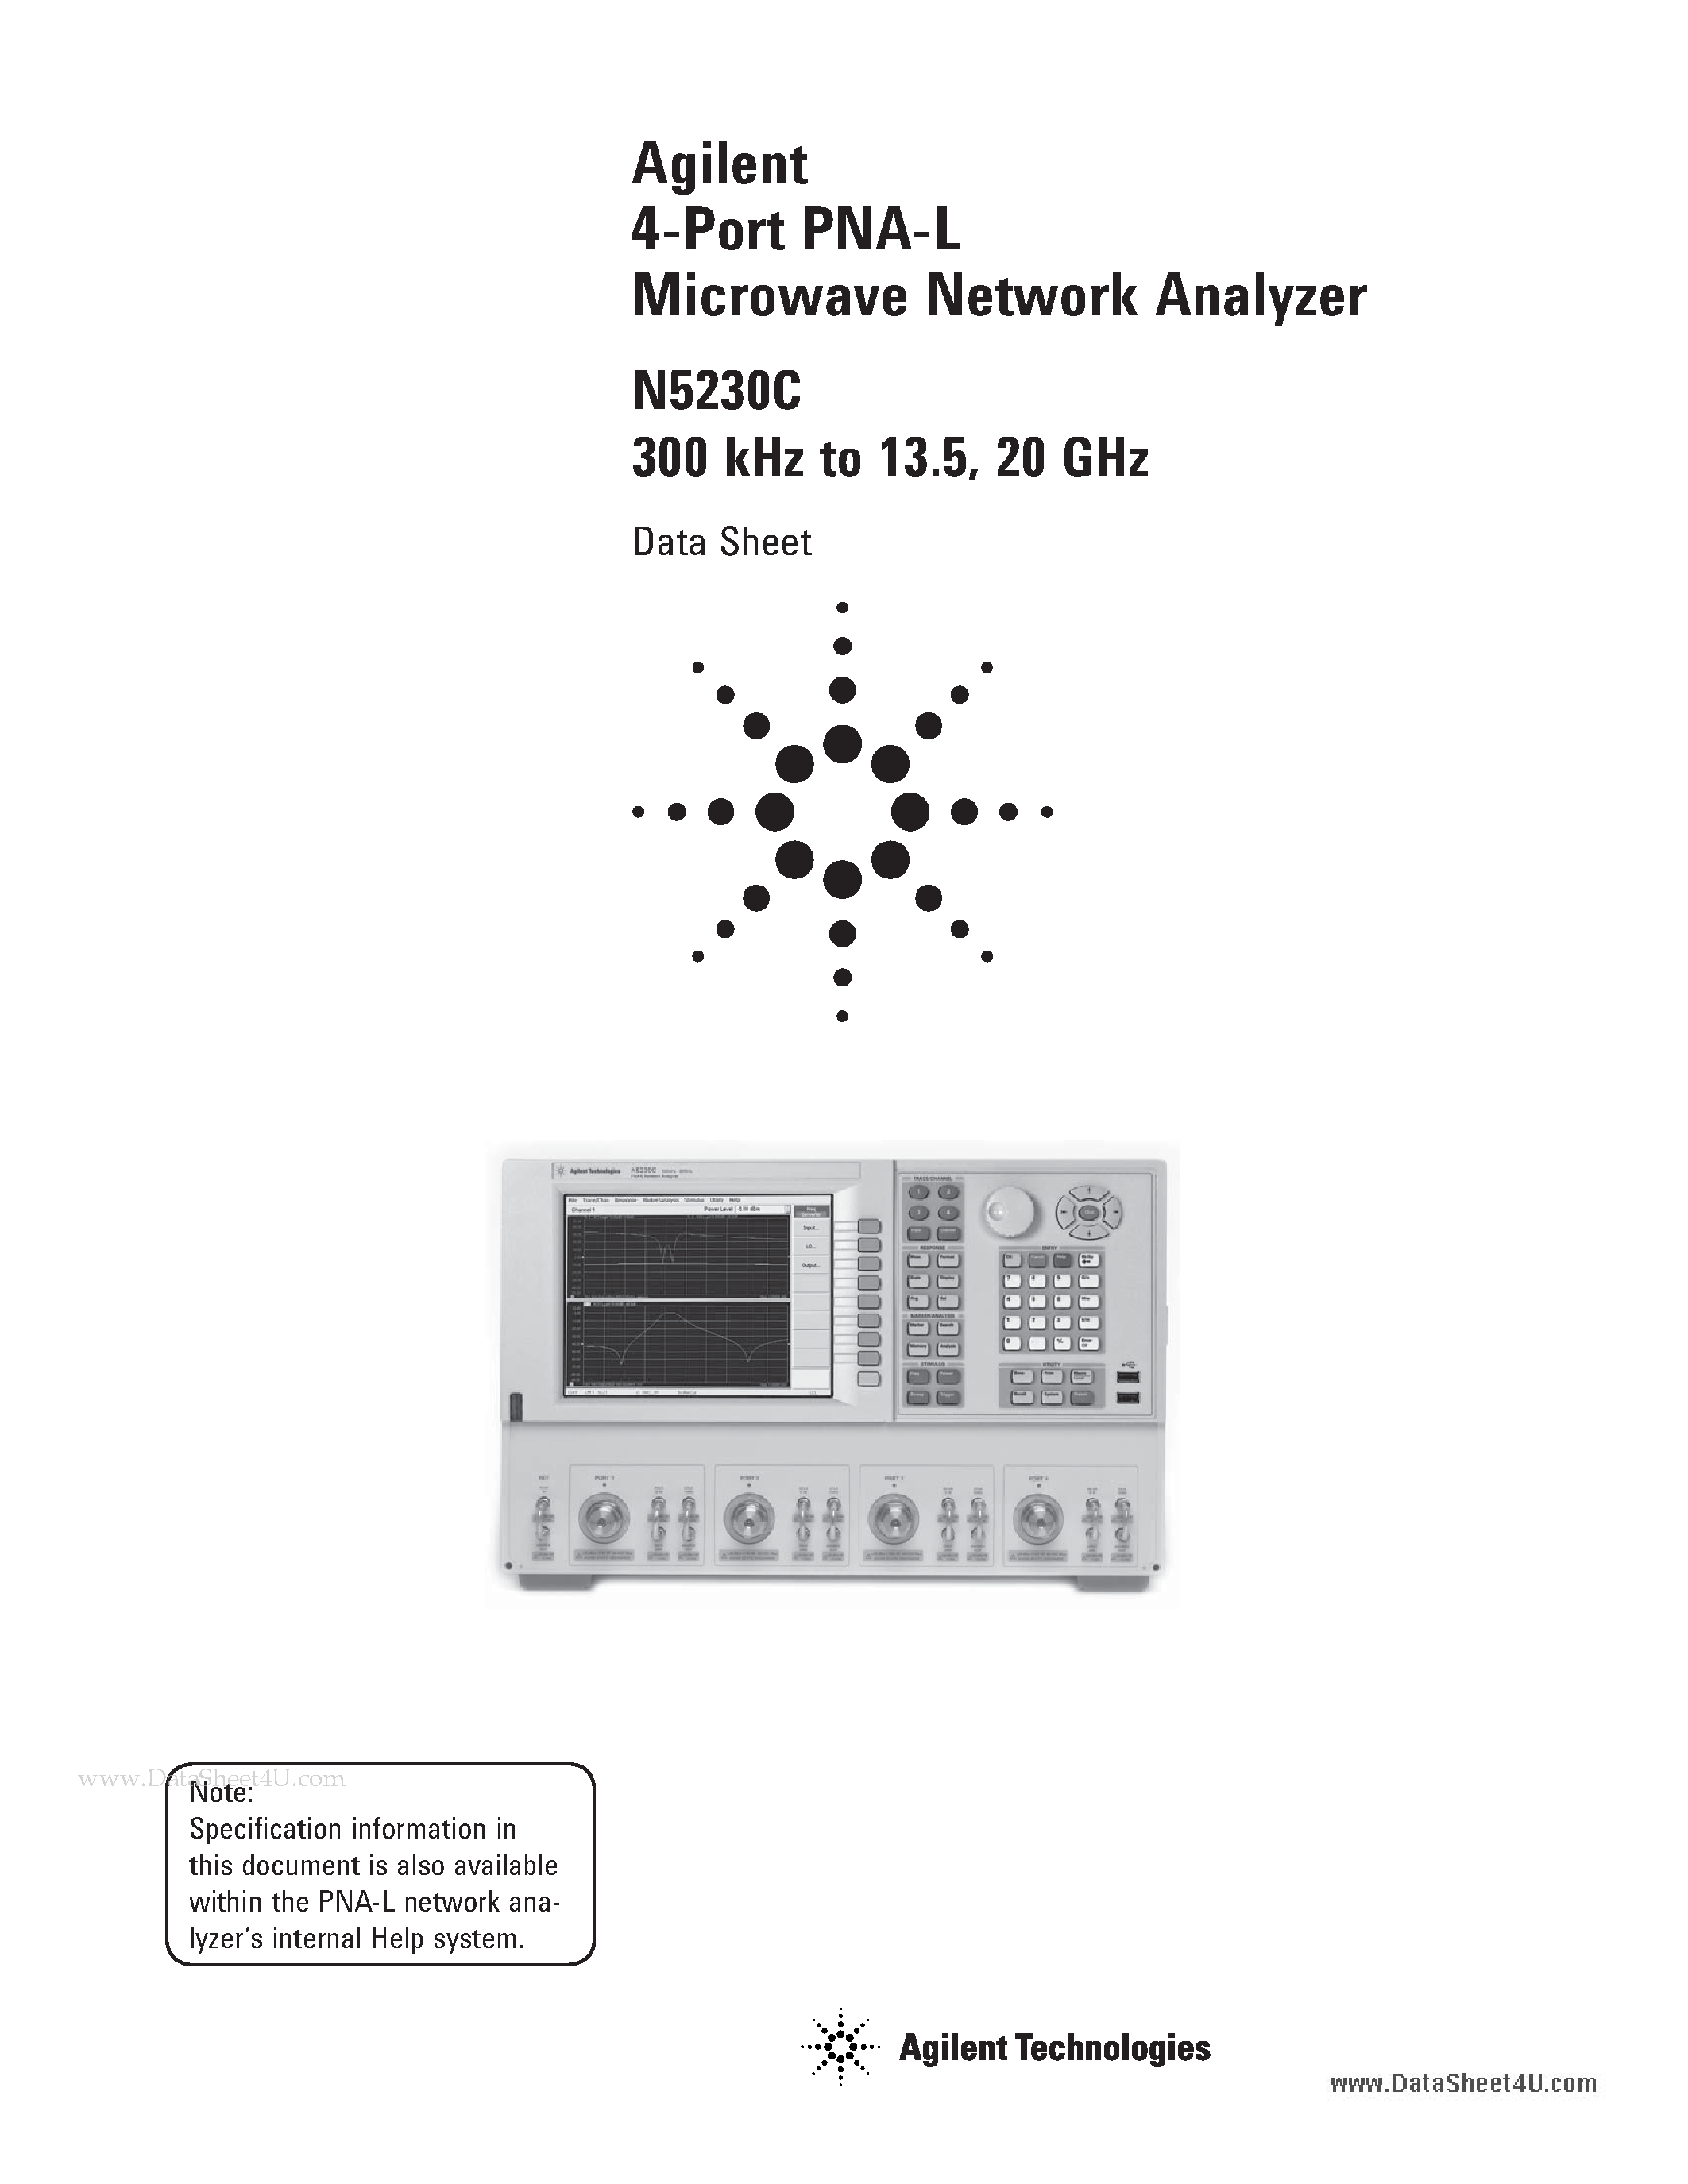 Даташит N5230C - 4-Port PNA-L Microwave Network Analyzer страница 1